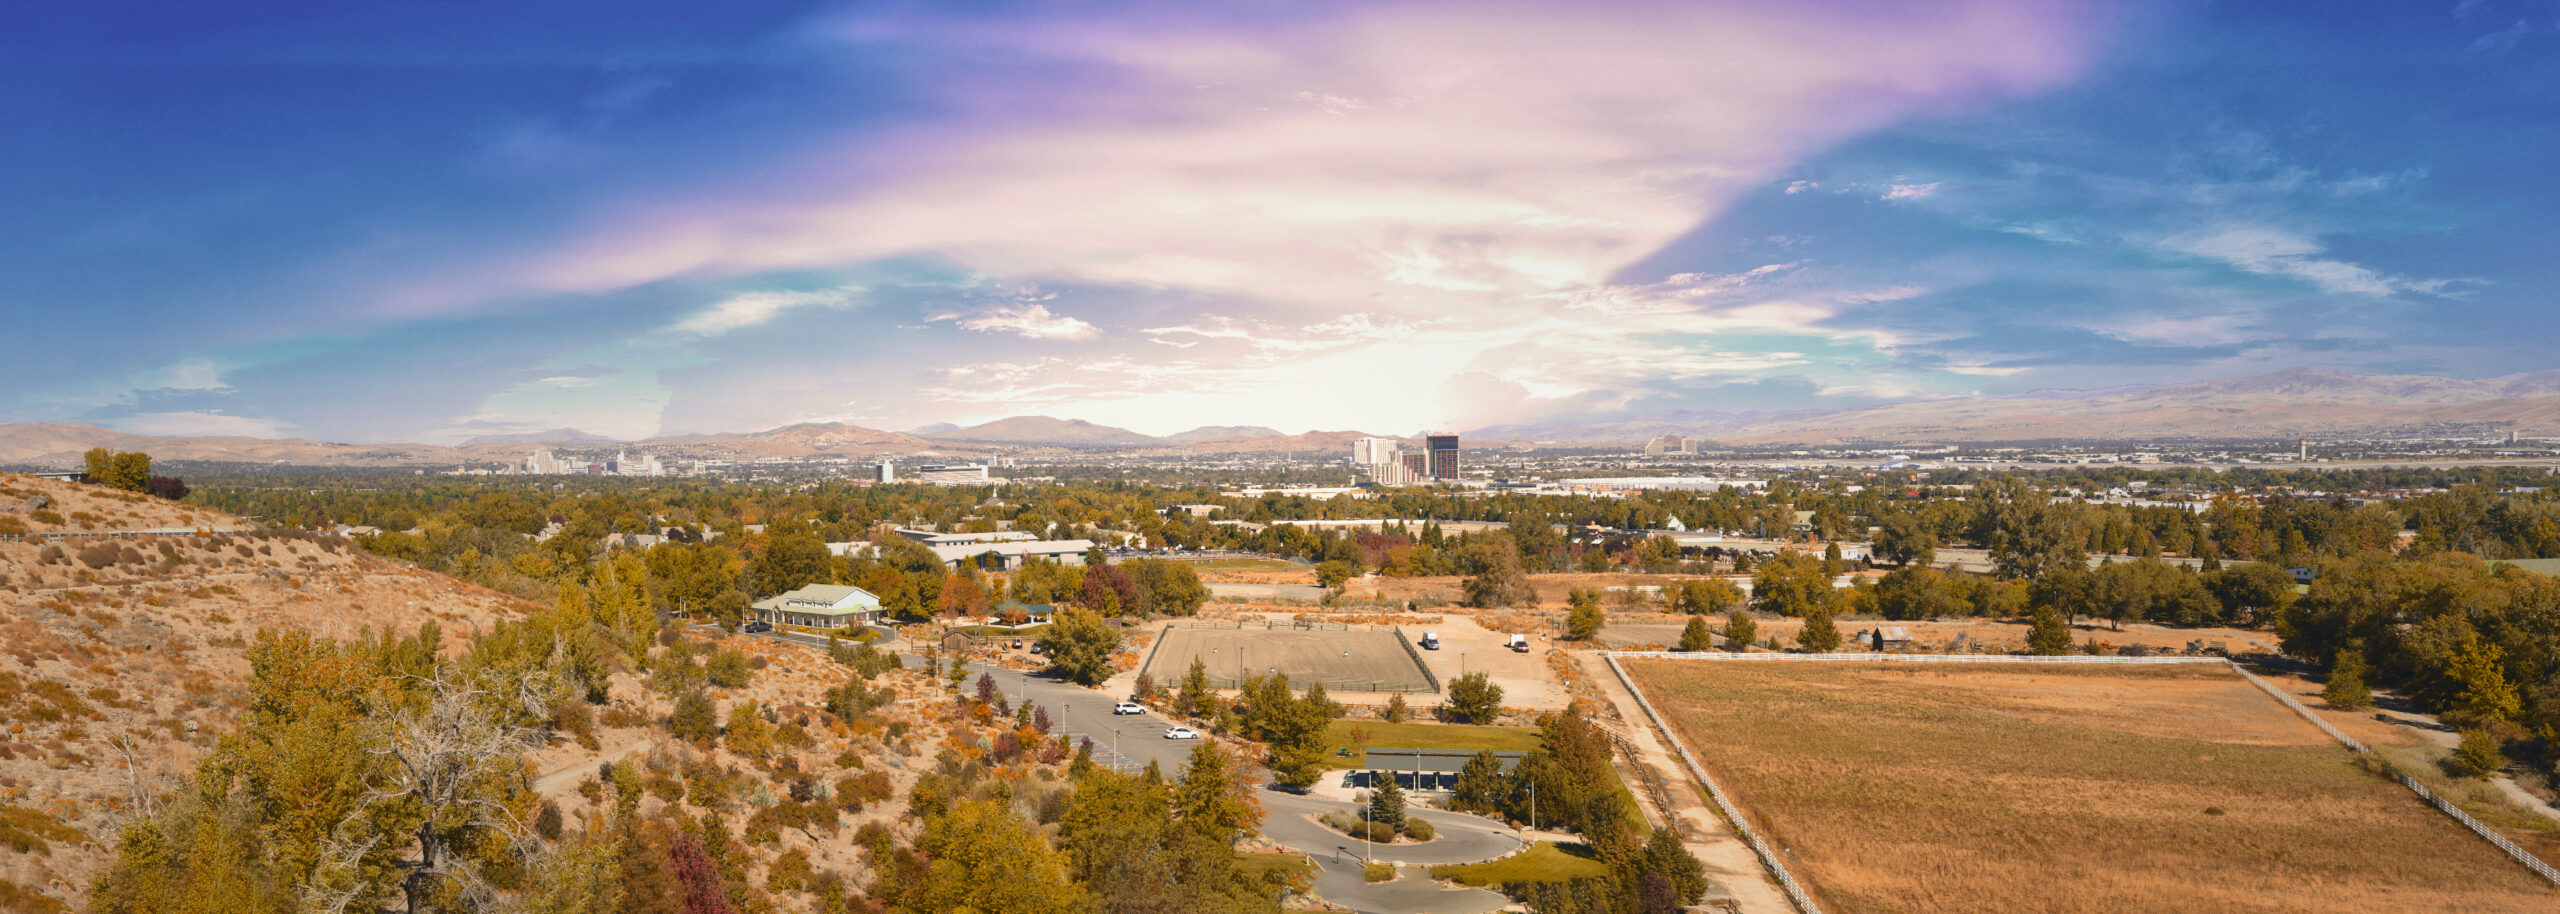 skyline view of Reno